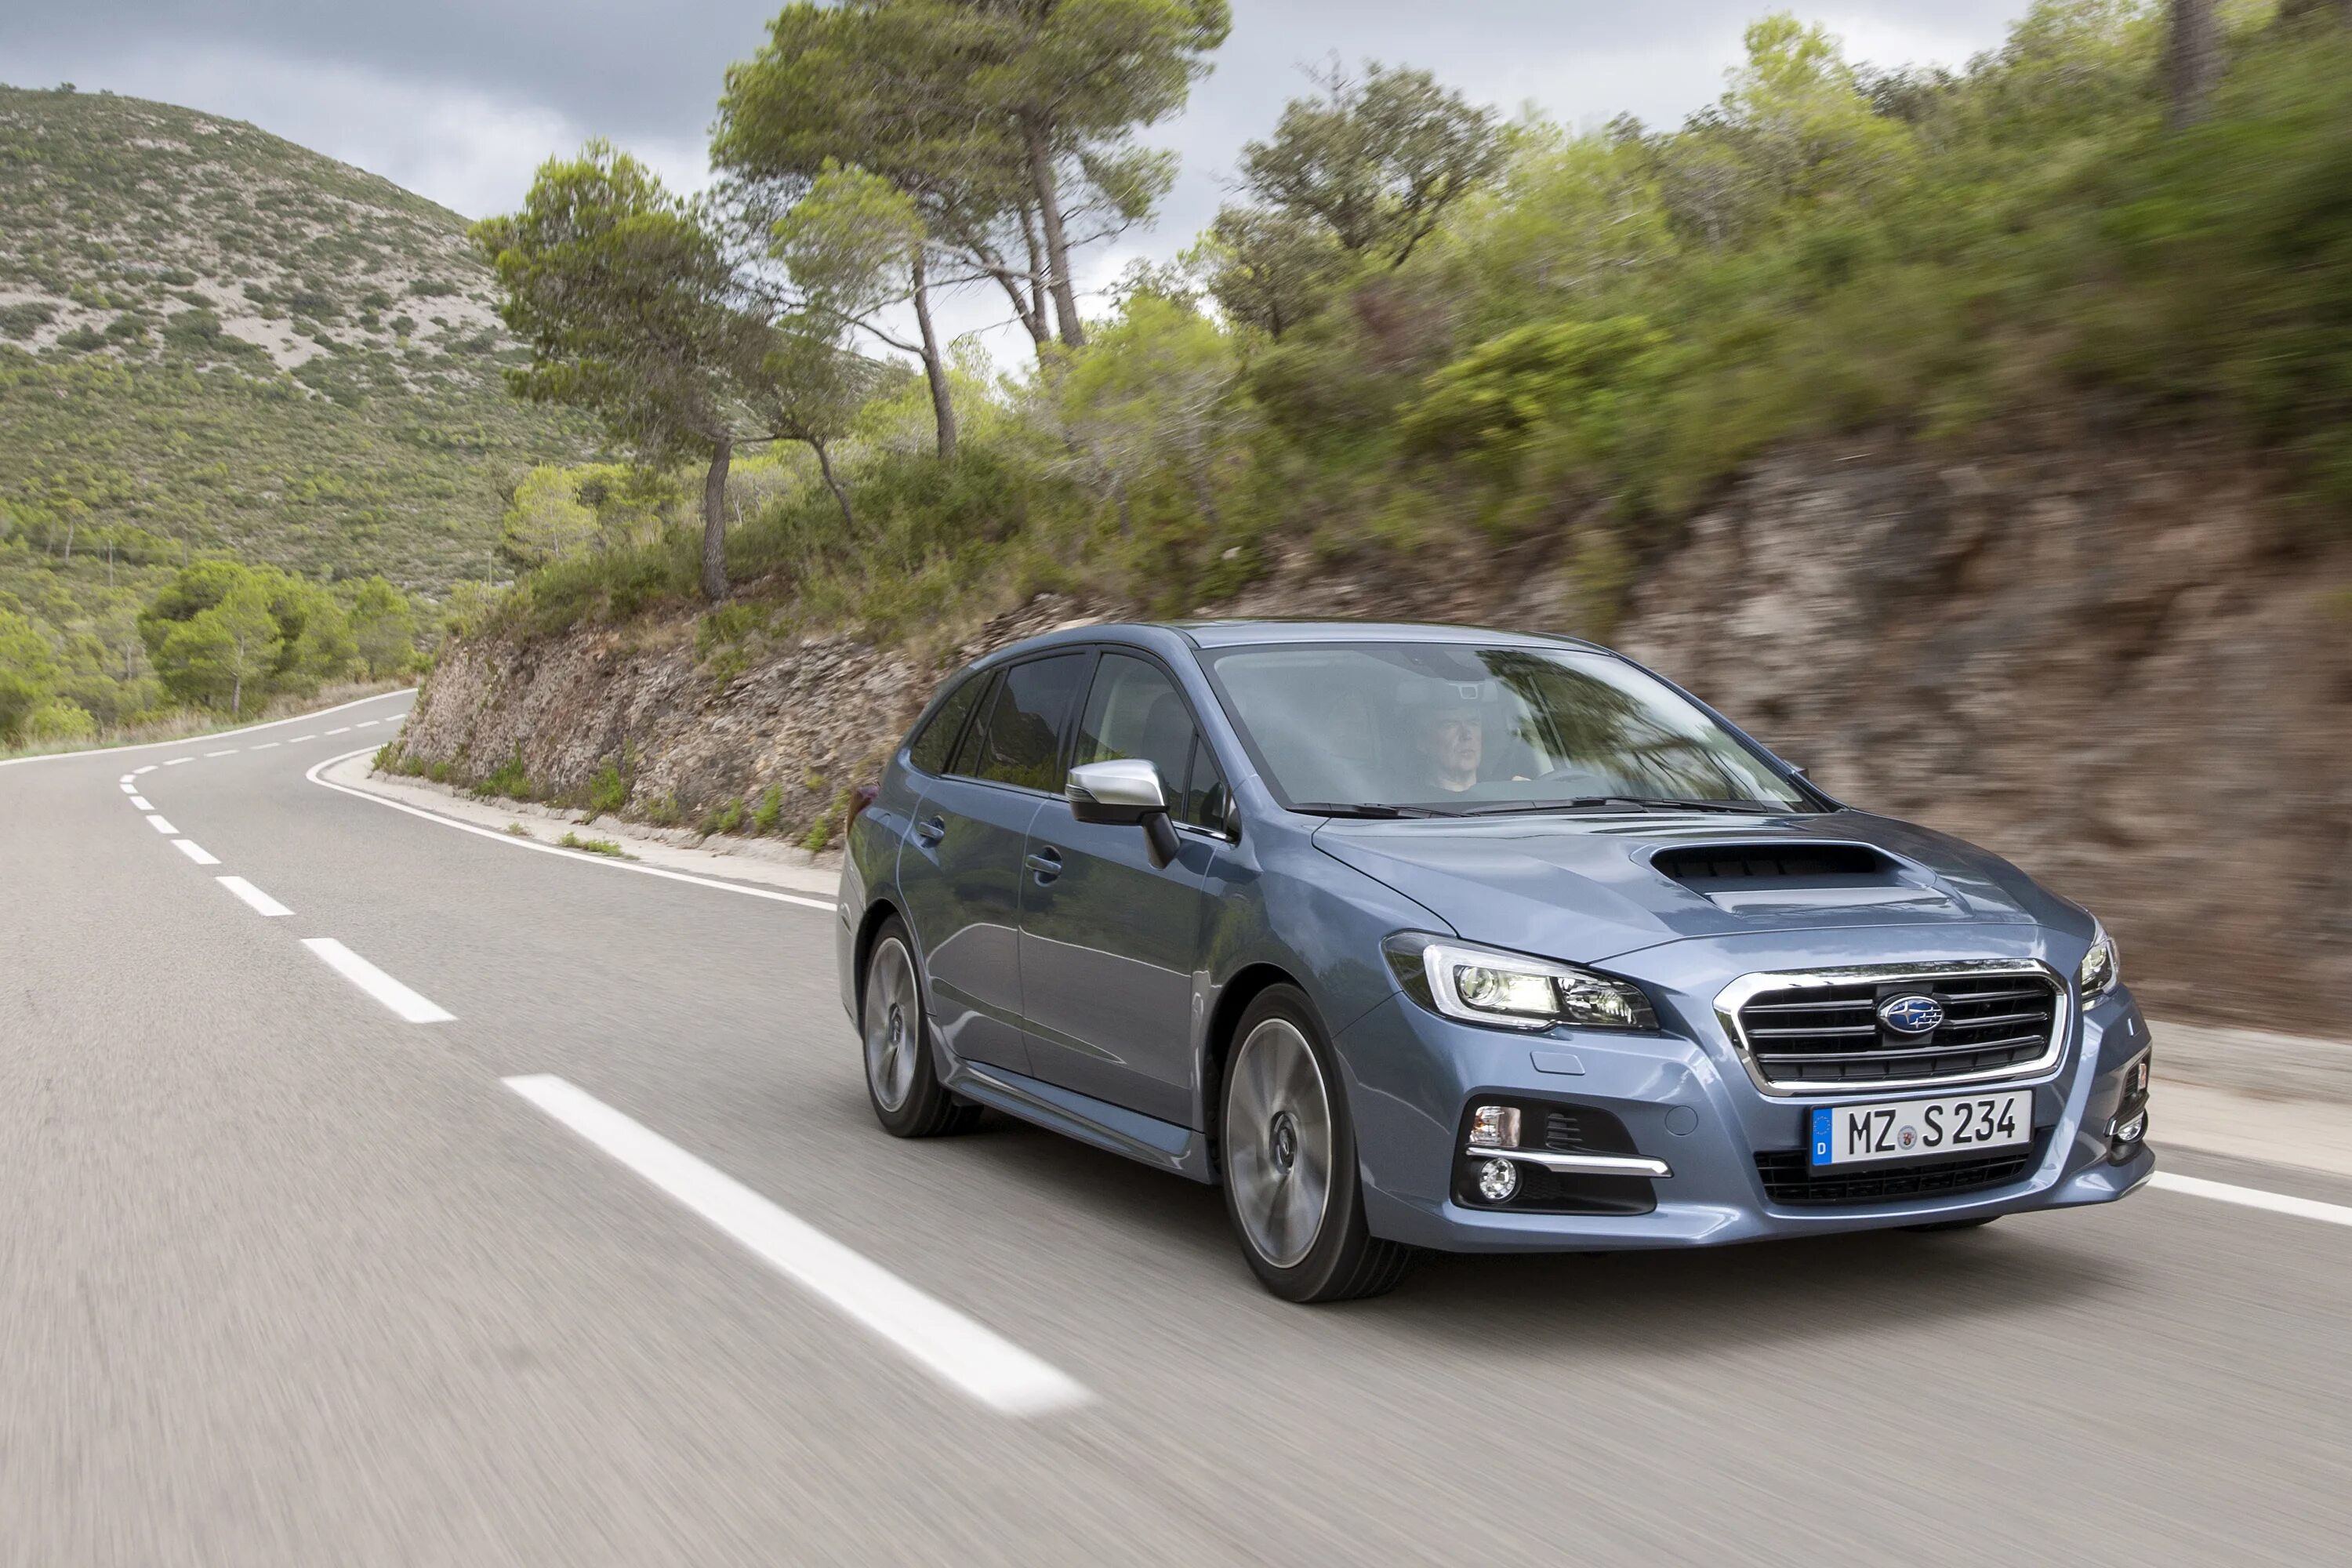 Subaru Legacy Леворг. Subaru Levorg седан. Subaru 2016 Levorg седан. Subaru Levorg STI.